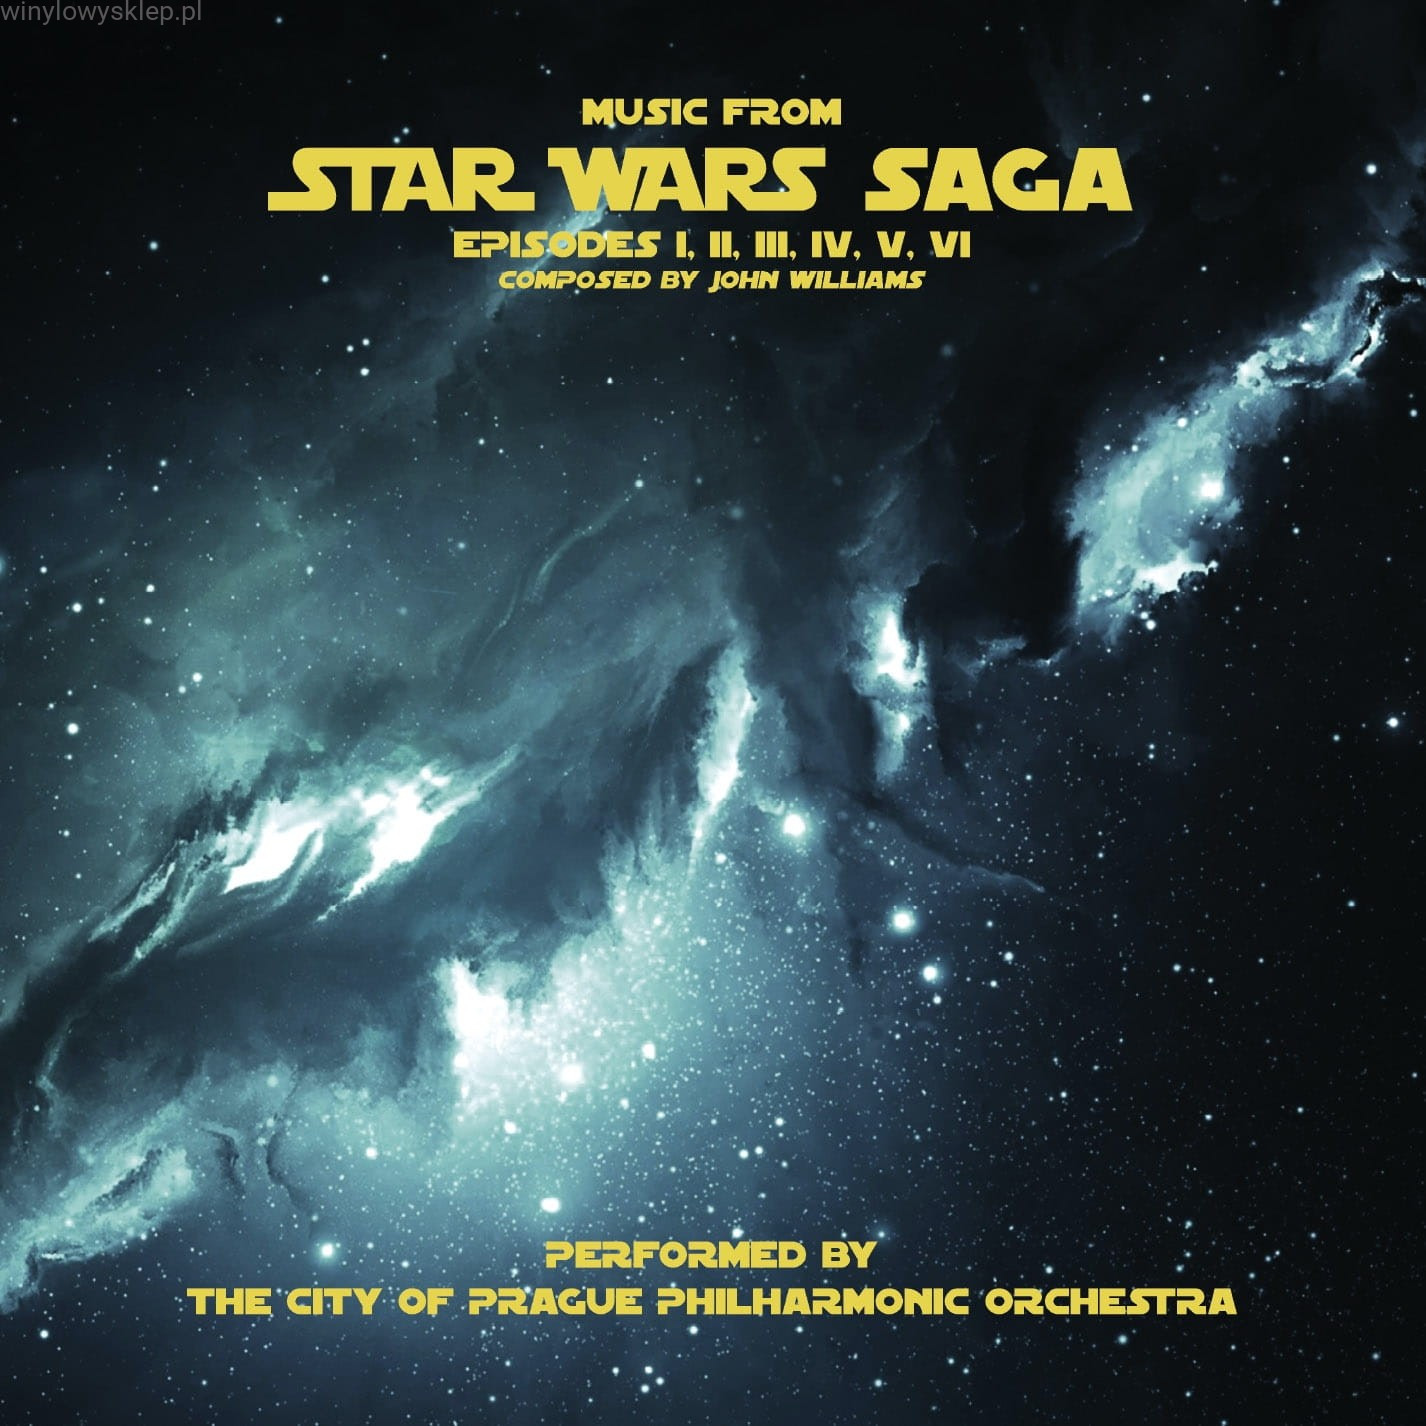 Oficiální soundtrack Star Wars - Music from Star Wars Saga na LP